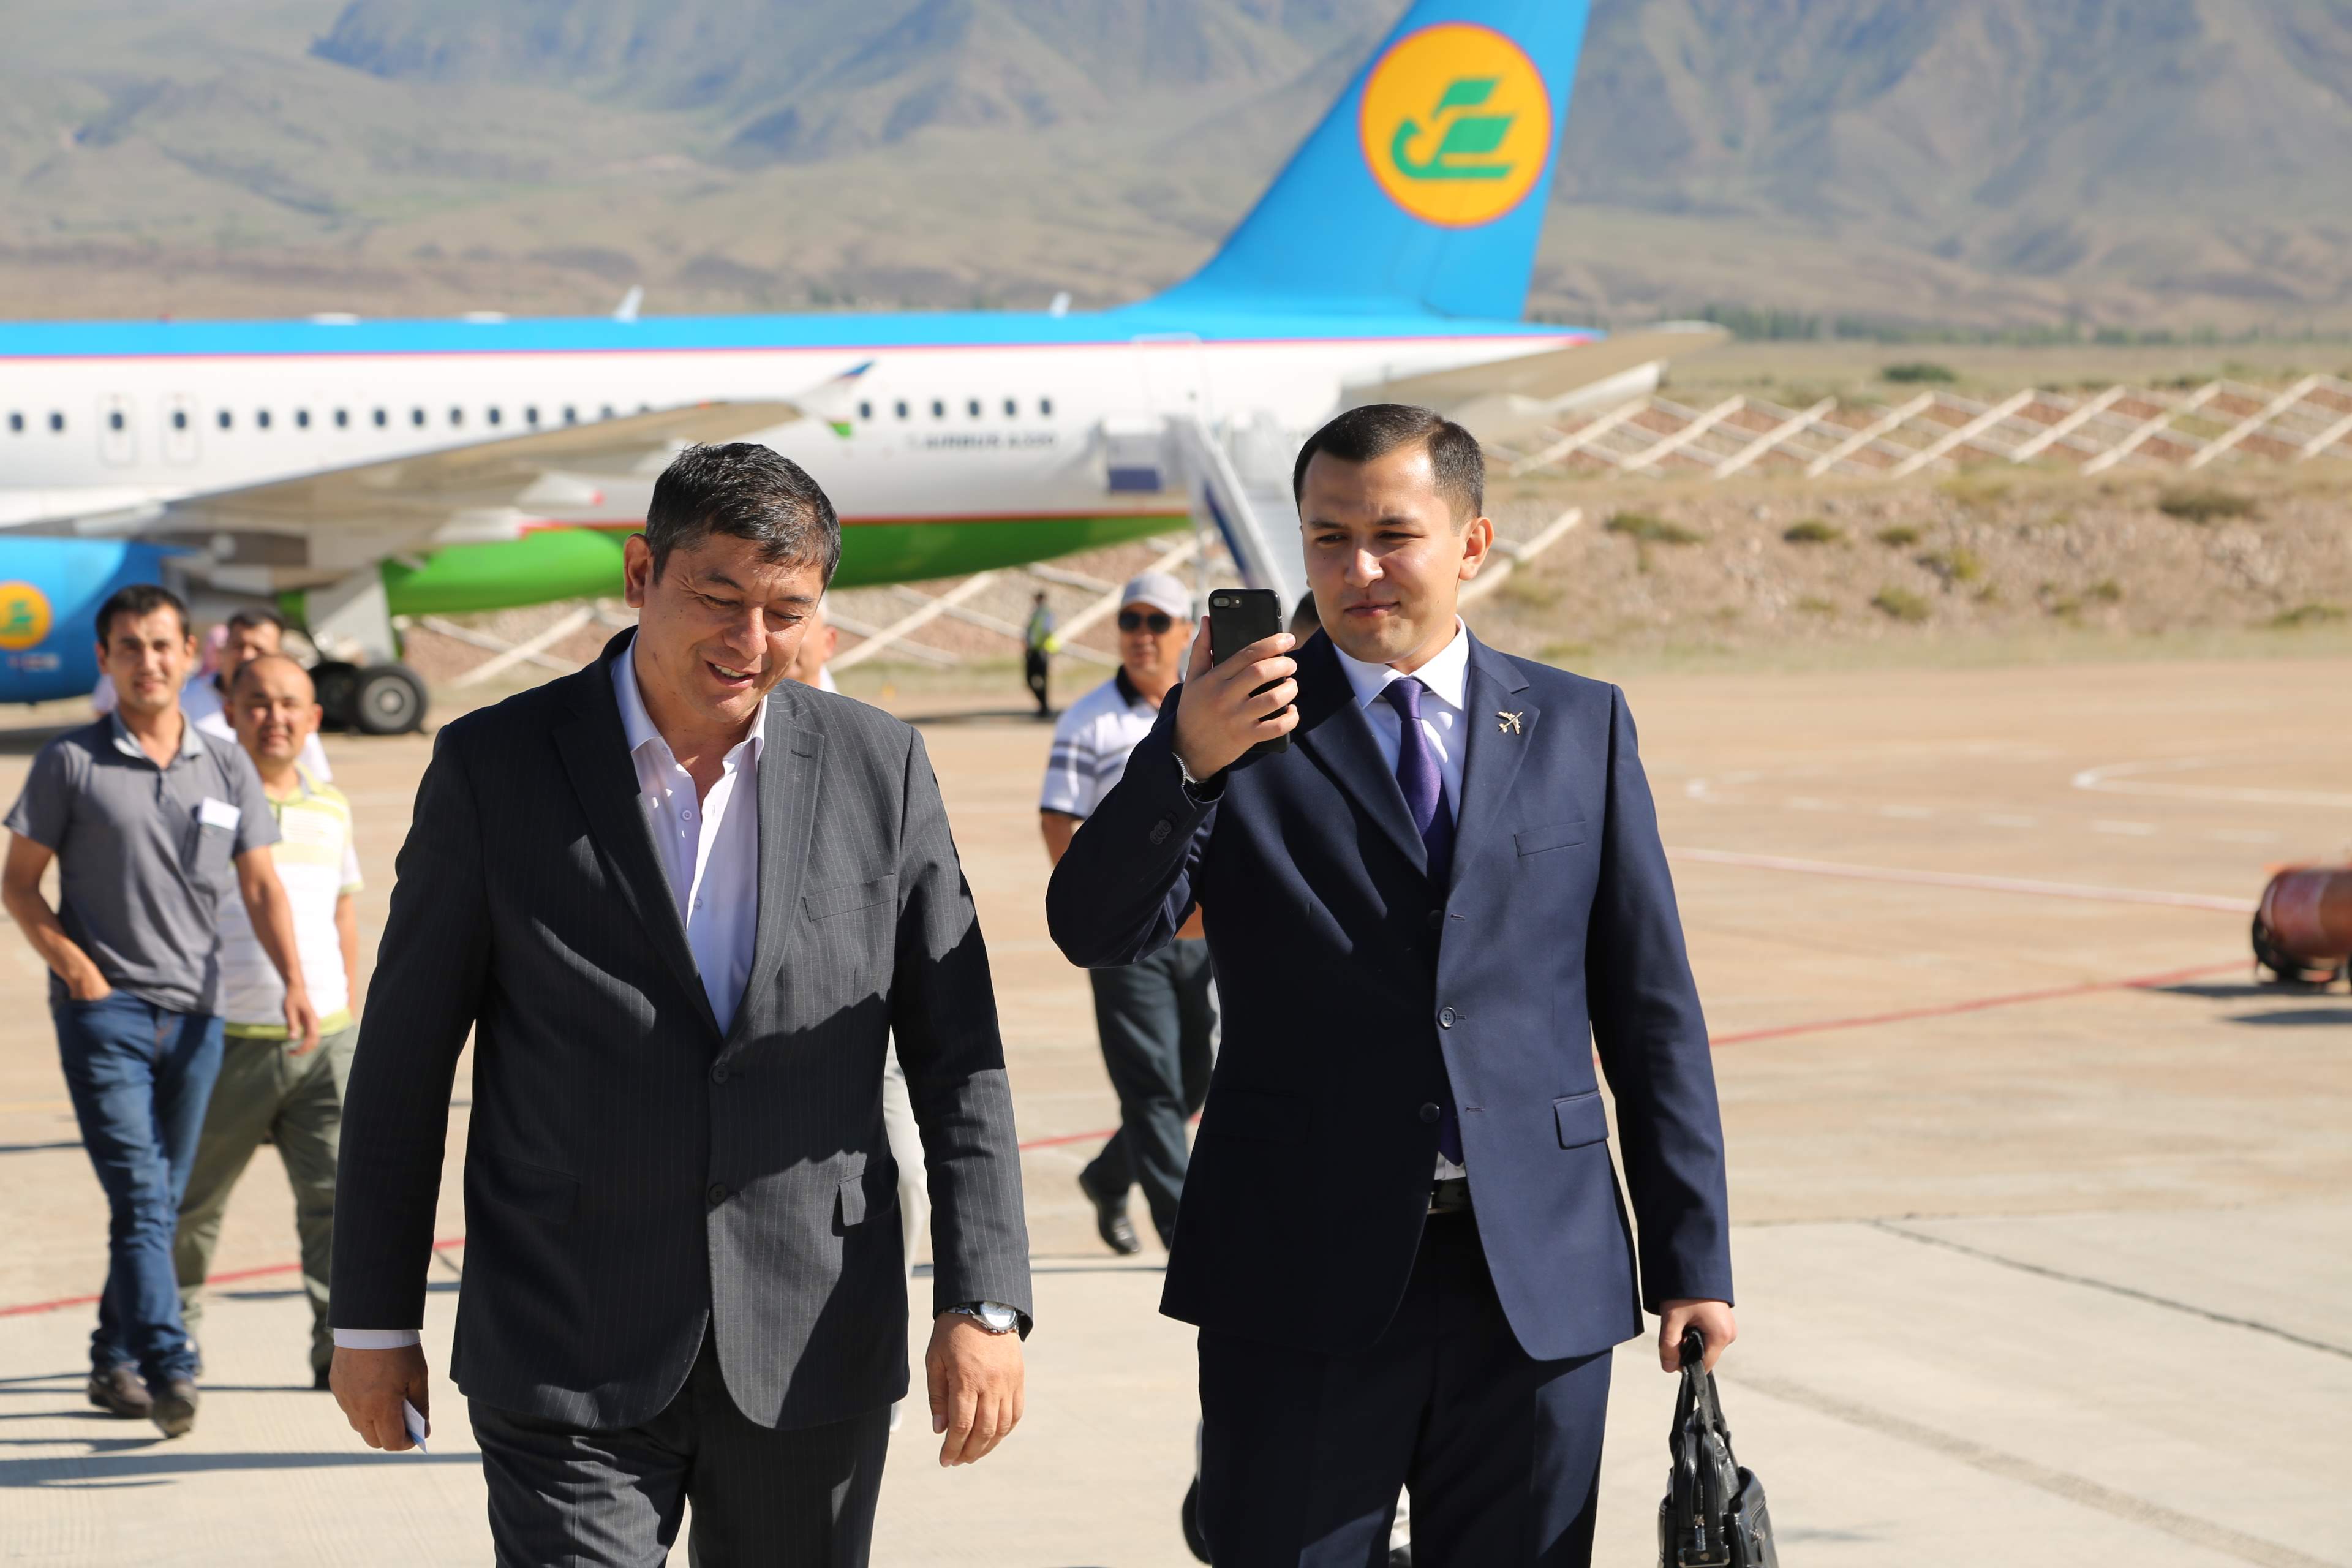 Kyrgyz Republic businessmen on cell phones